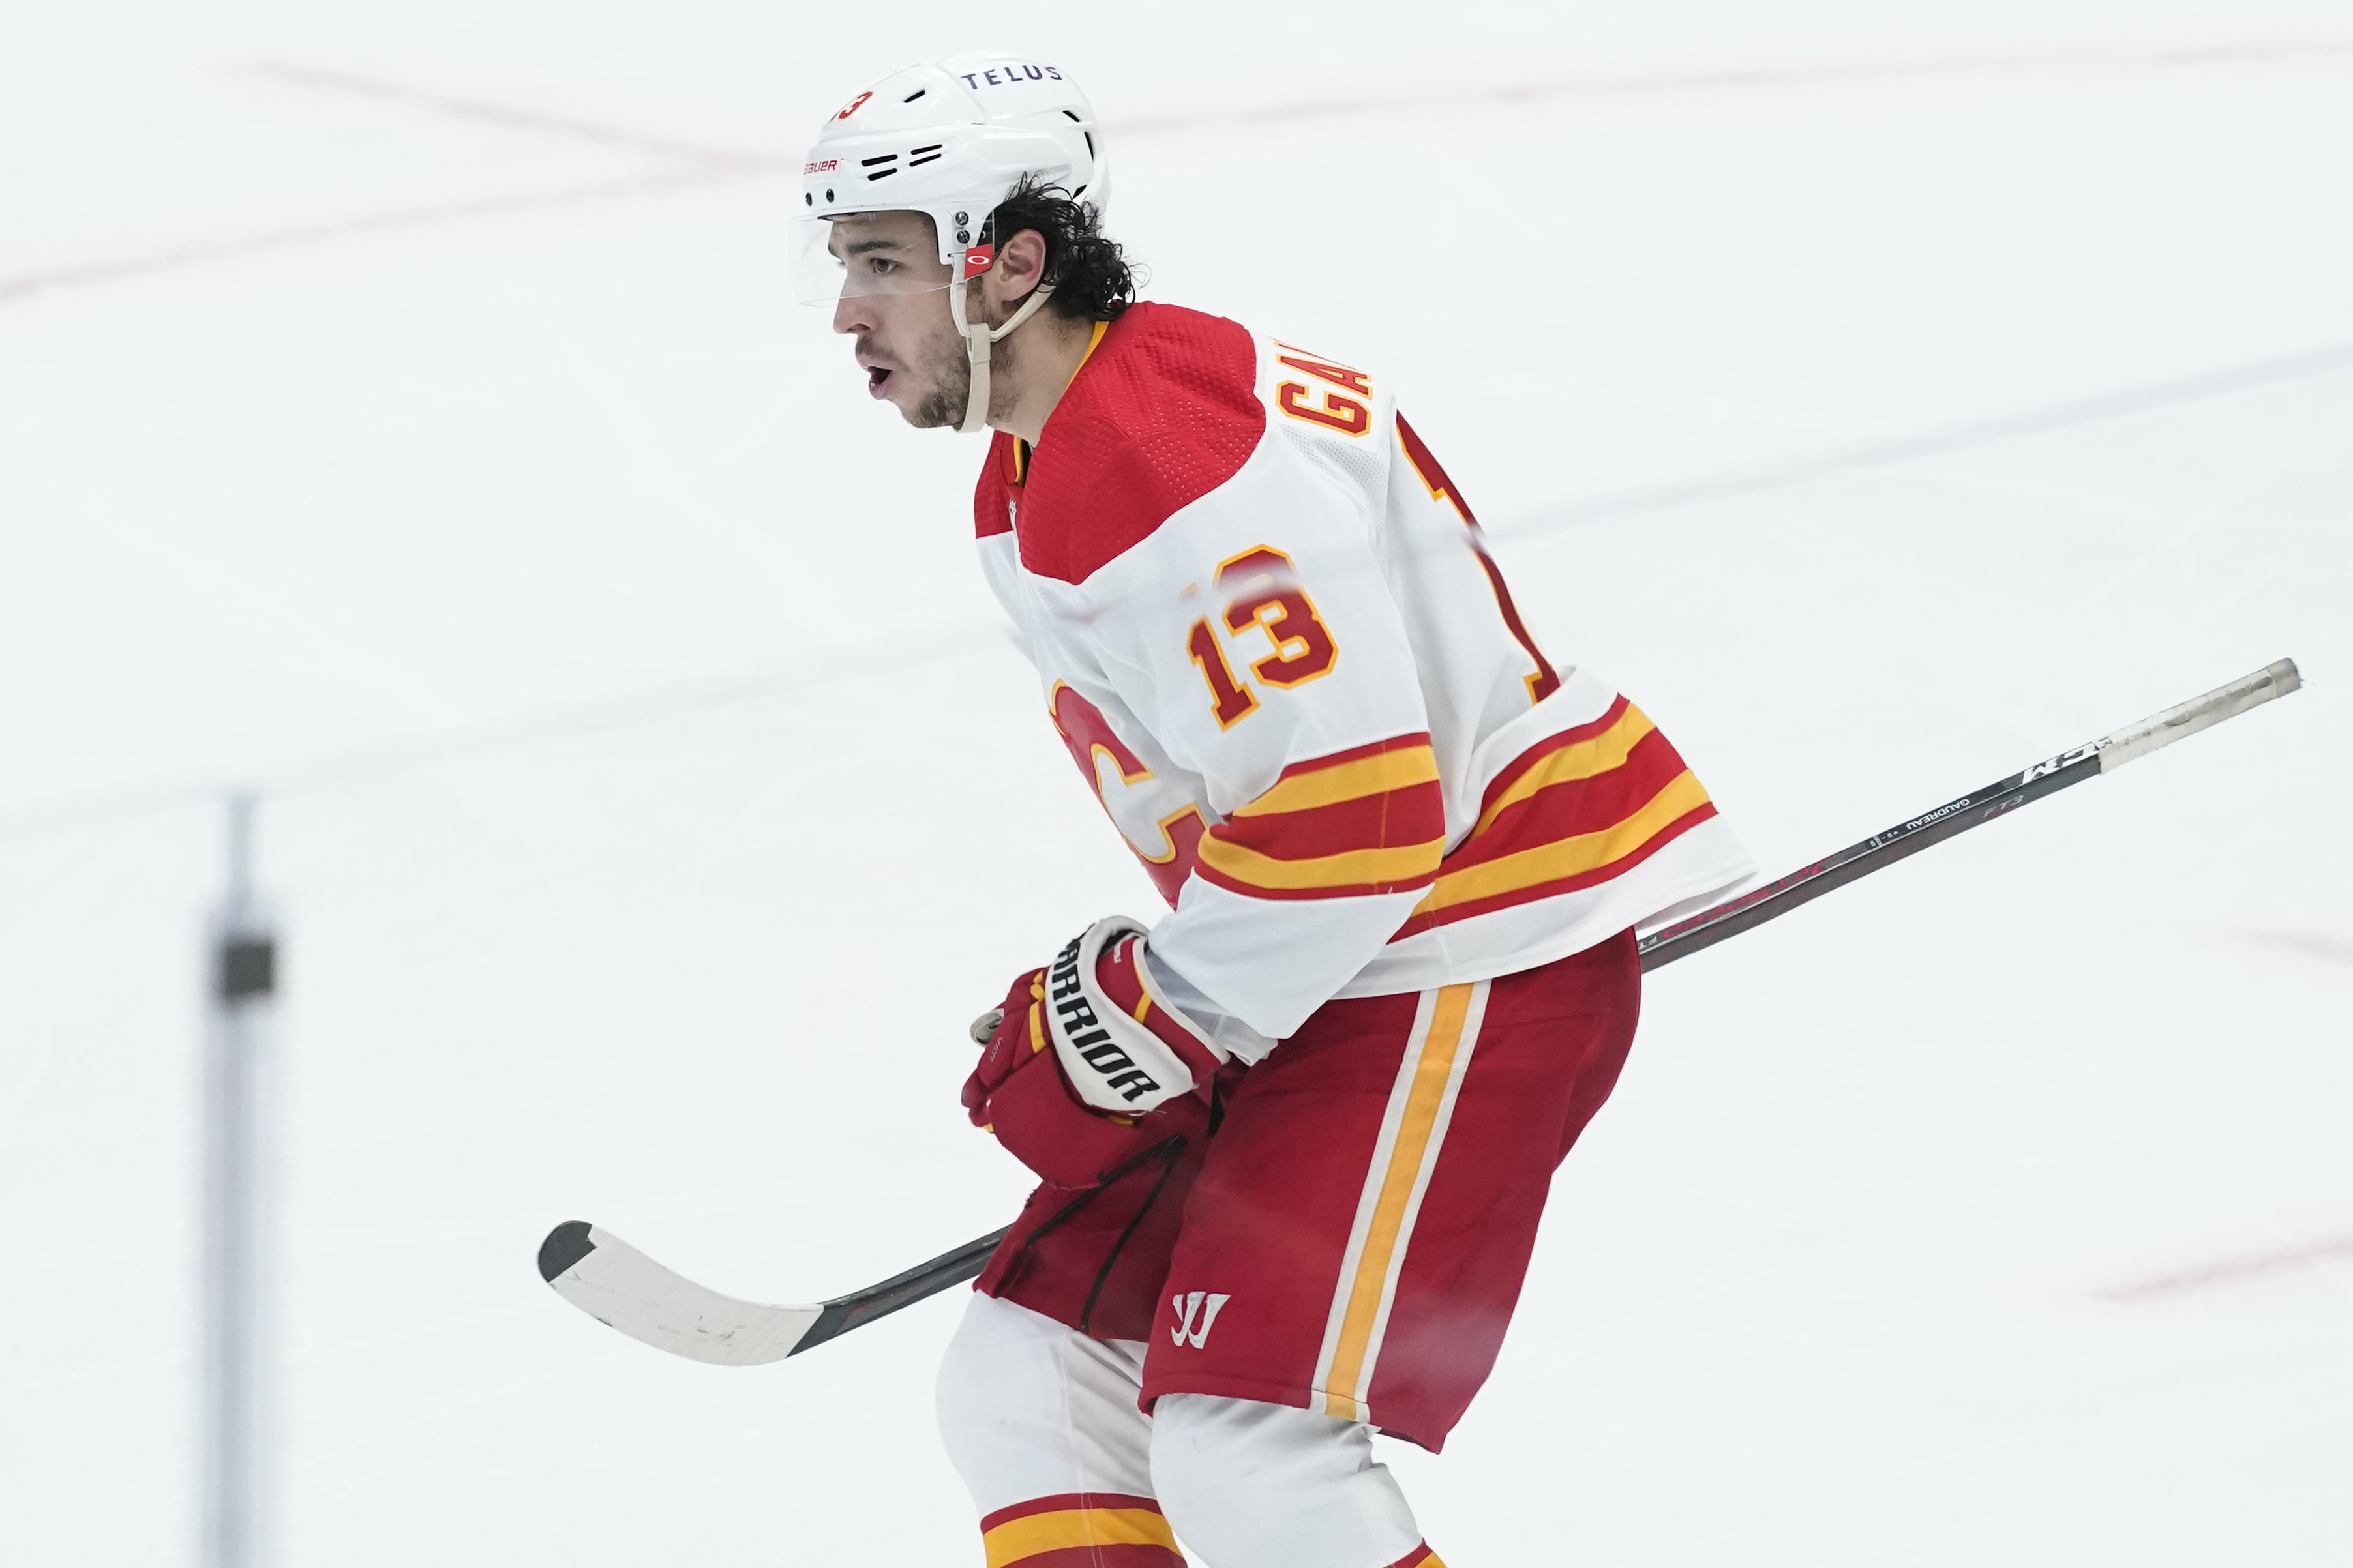 Former Flames star Johnny Gaudreau returns to Calgary's Saddledome